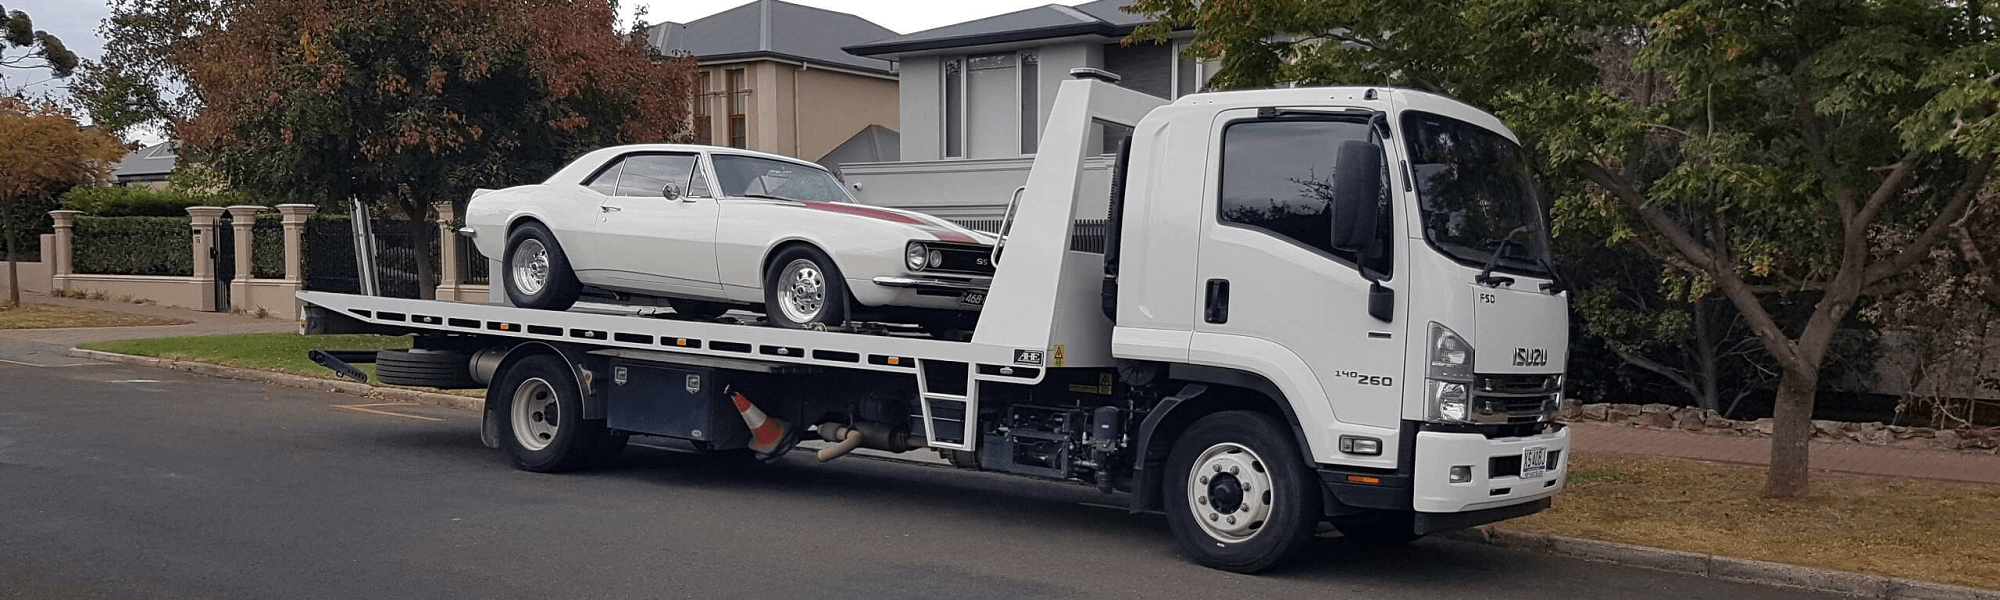 Car Towing Adelaide 026